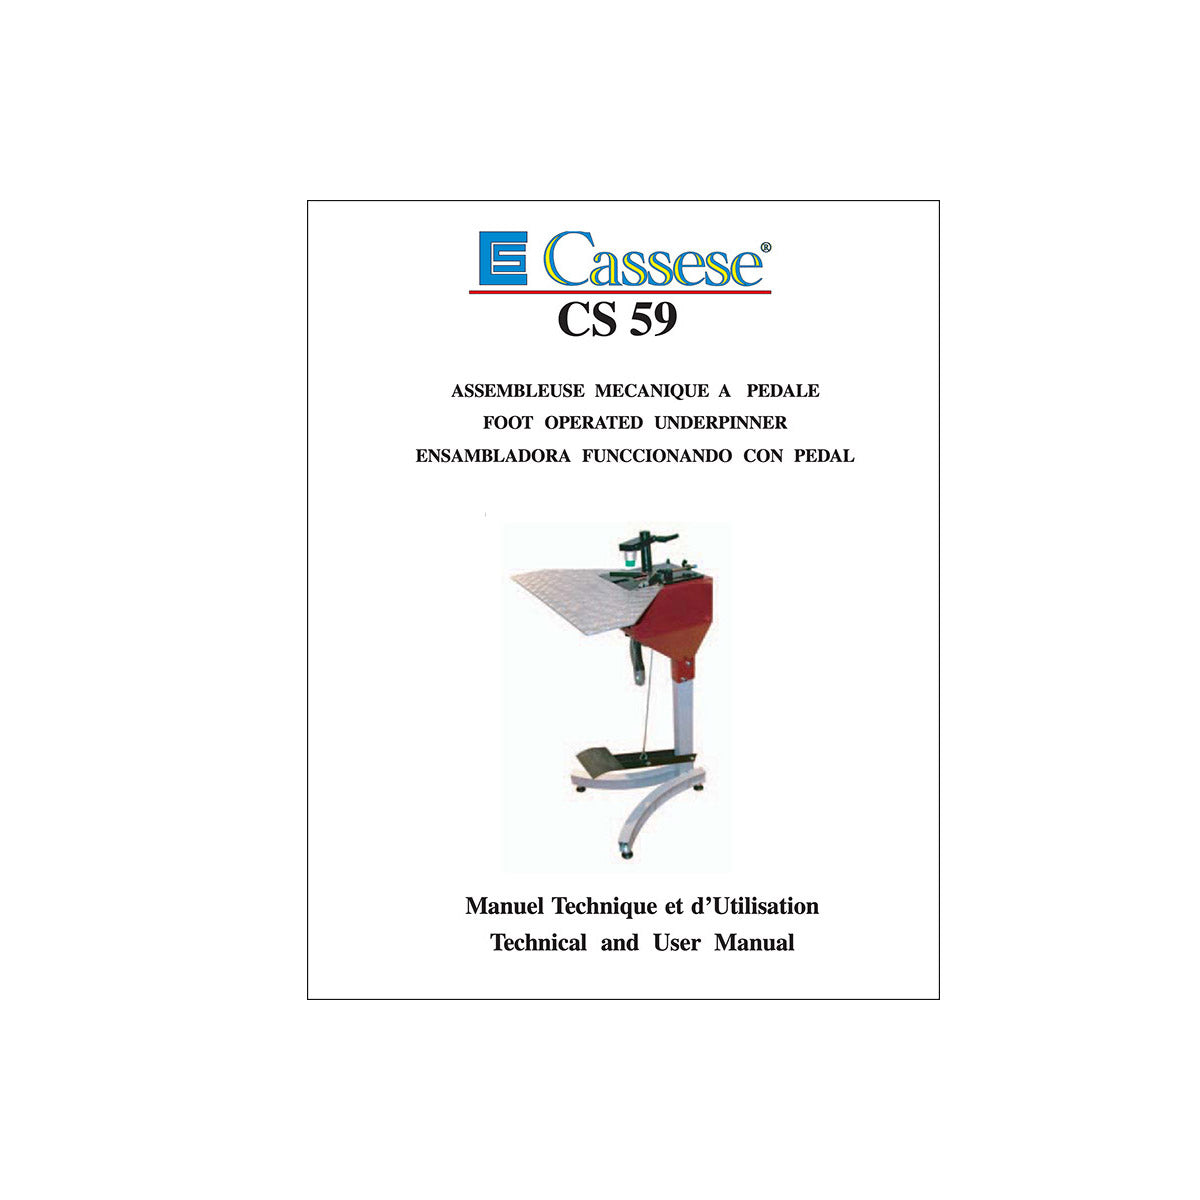 Cassese cs59 - Underpinner Spares